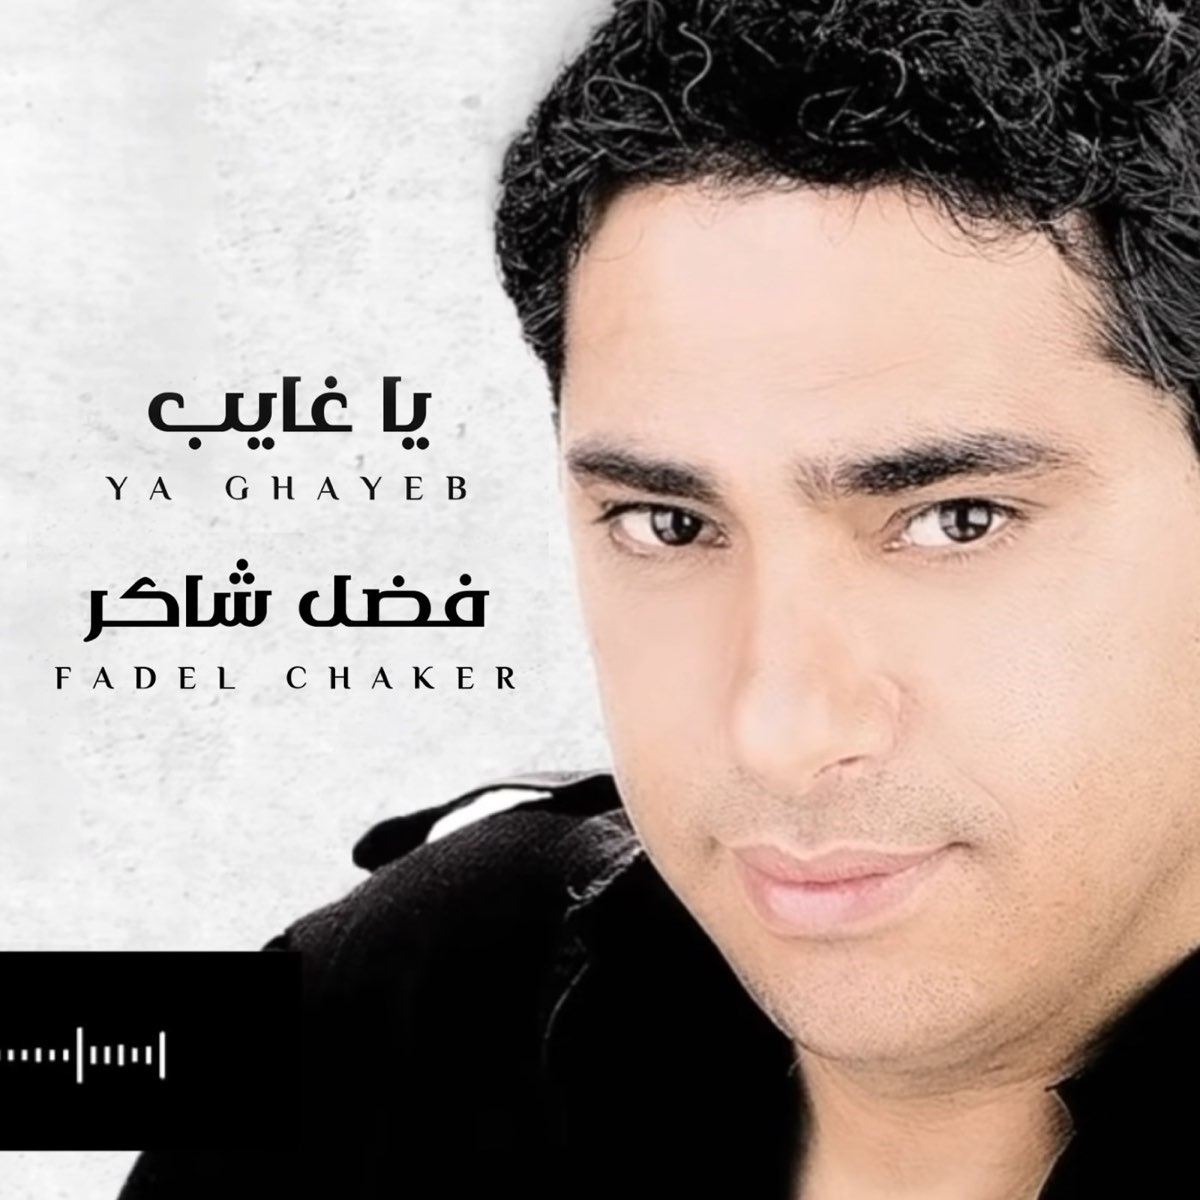 Ya Ghayeb - Single - Album by Fadel Chaker - Apple Music